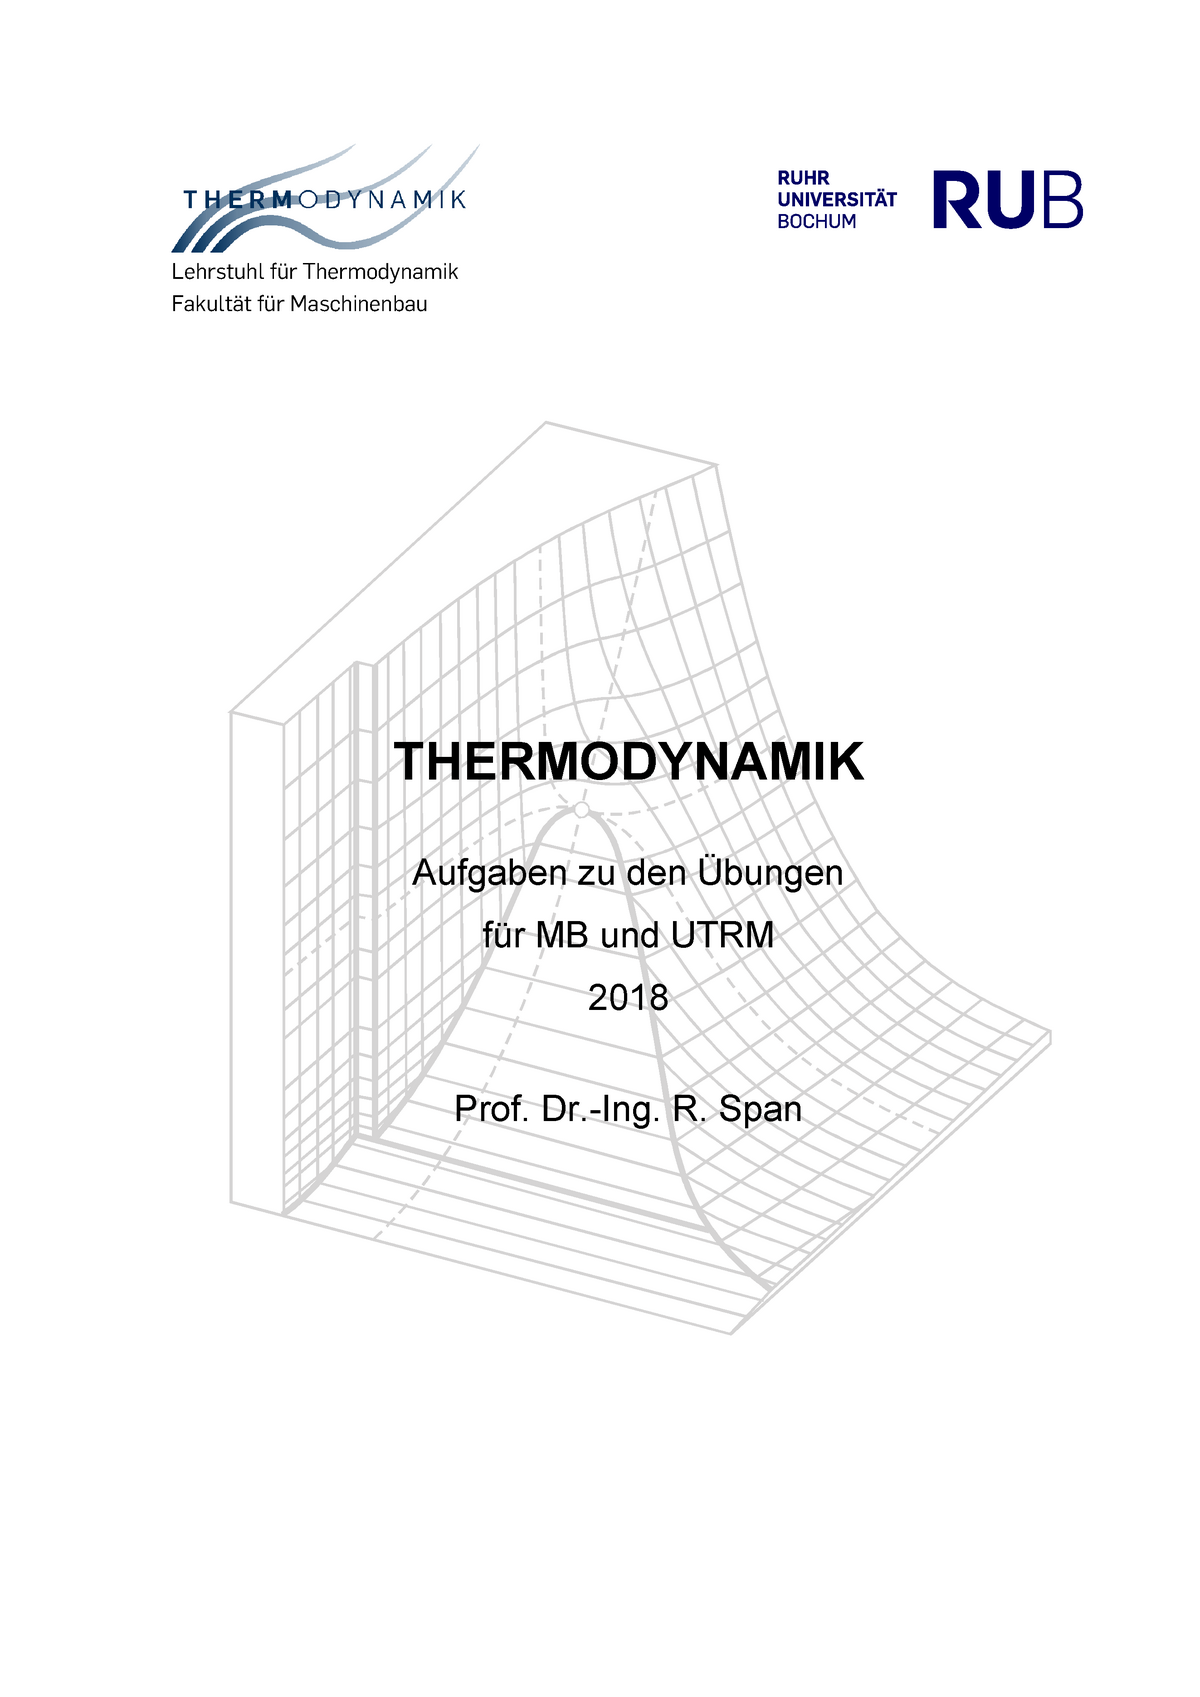 Übungskatalog So Se 2019 - Thermodynamik 134020 - RUB ...